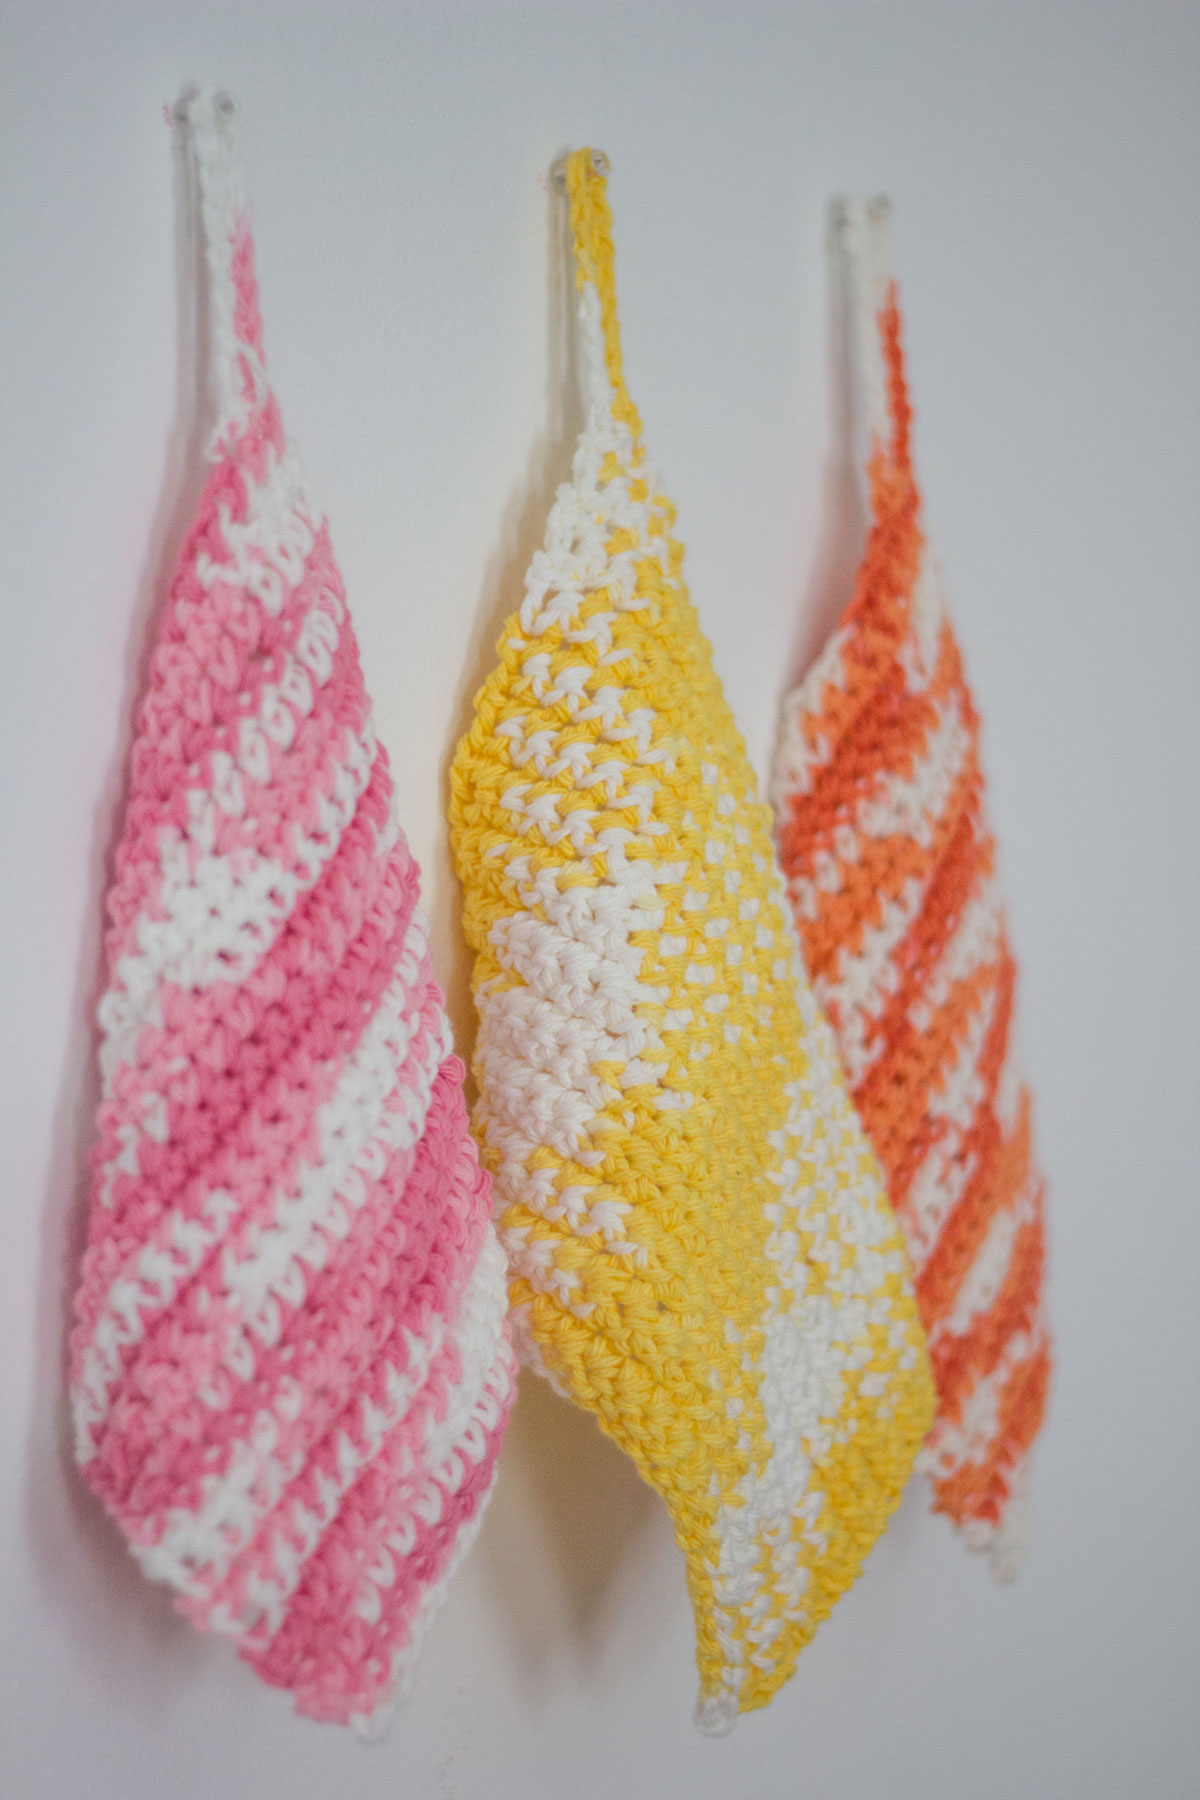 hanging_up_handmade_crochet_potholders